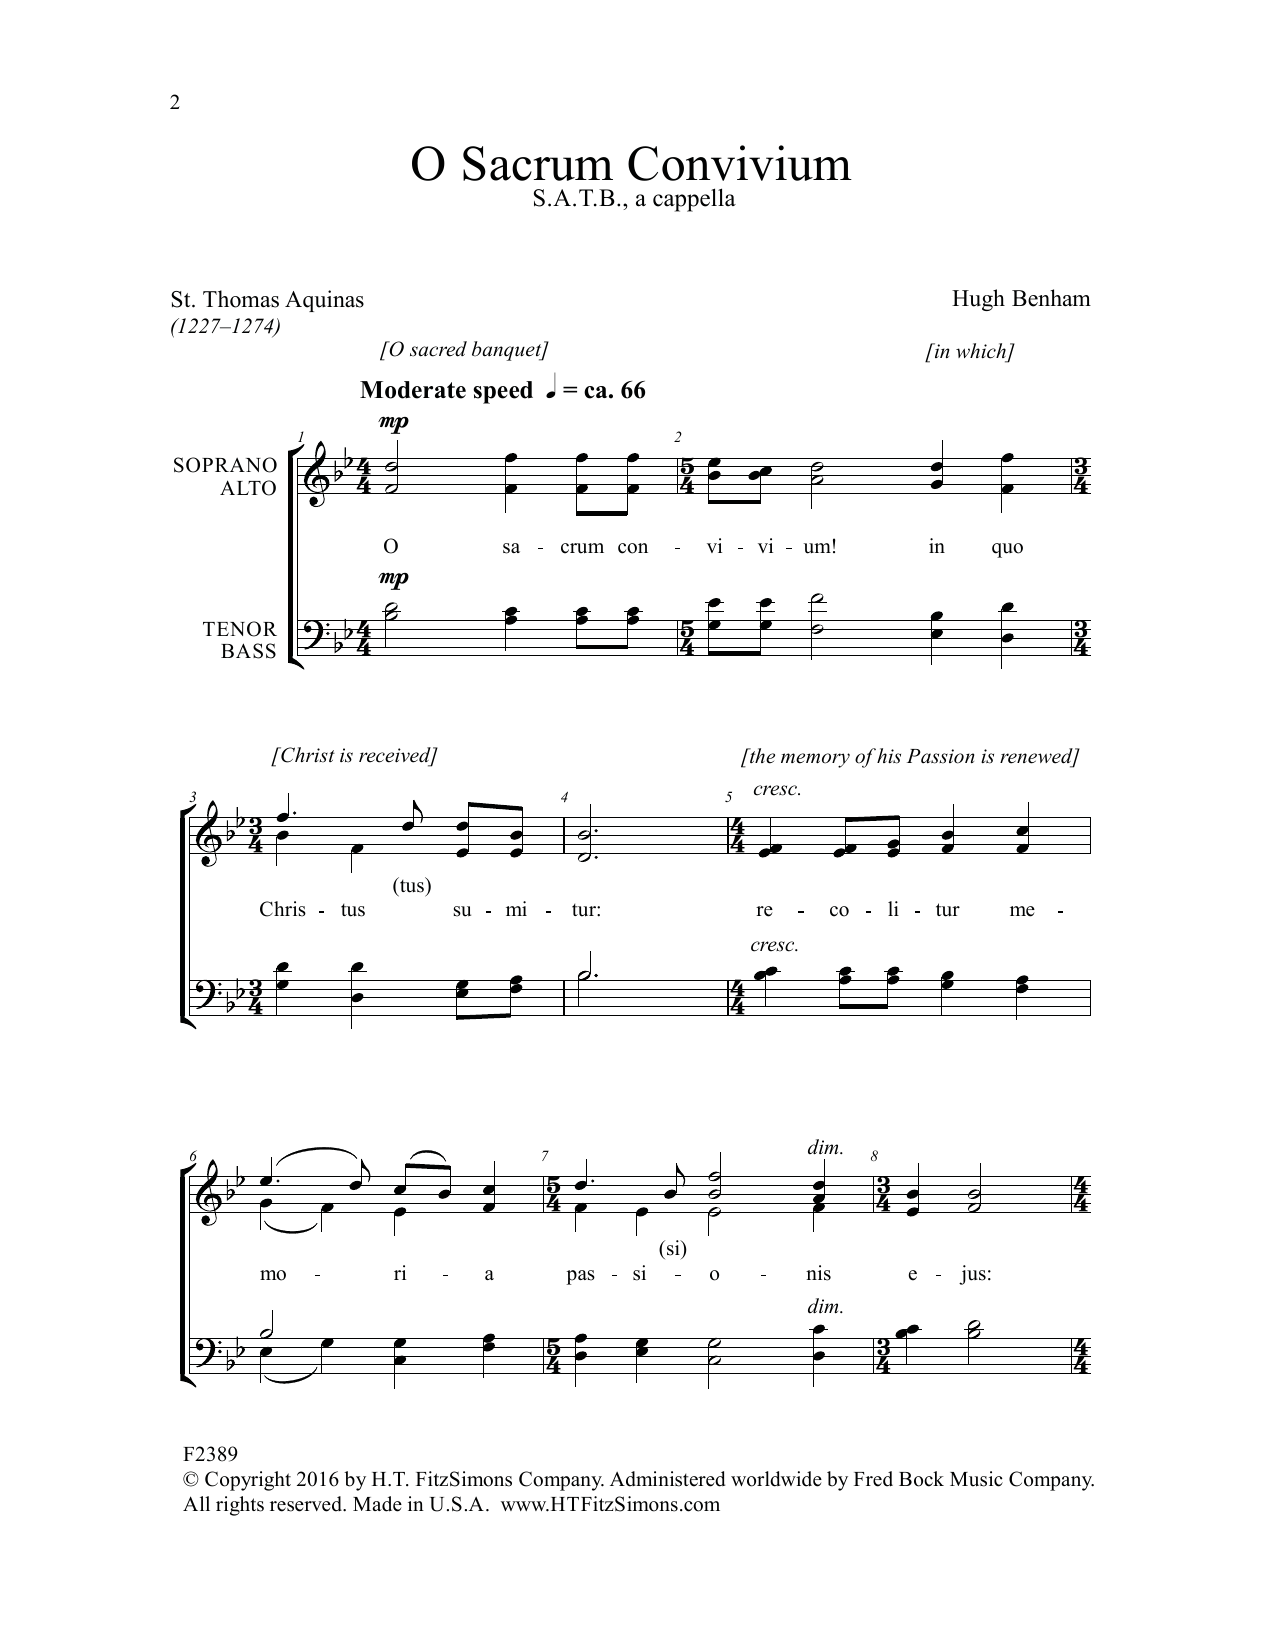 Download Hugh Benham O Sacrum Convivium Sheet Music and learn how to play SATB Choir PDF digital score in minutes